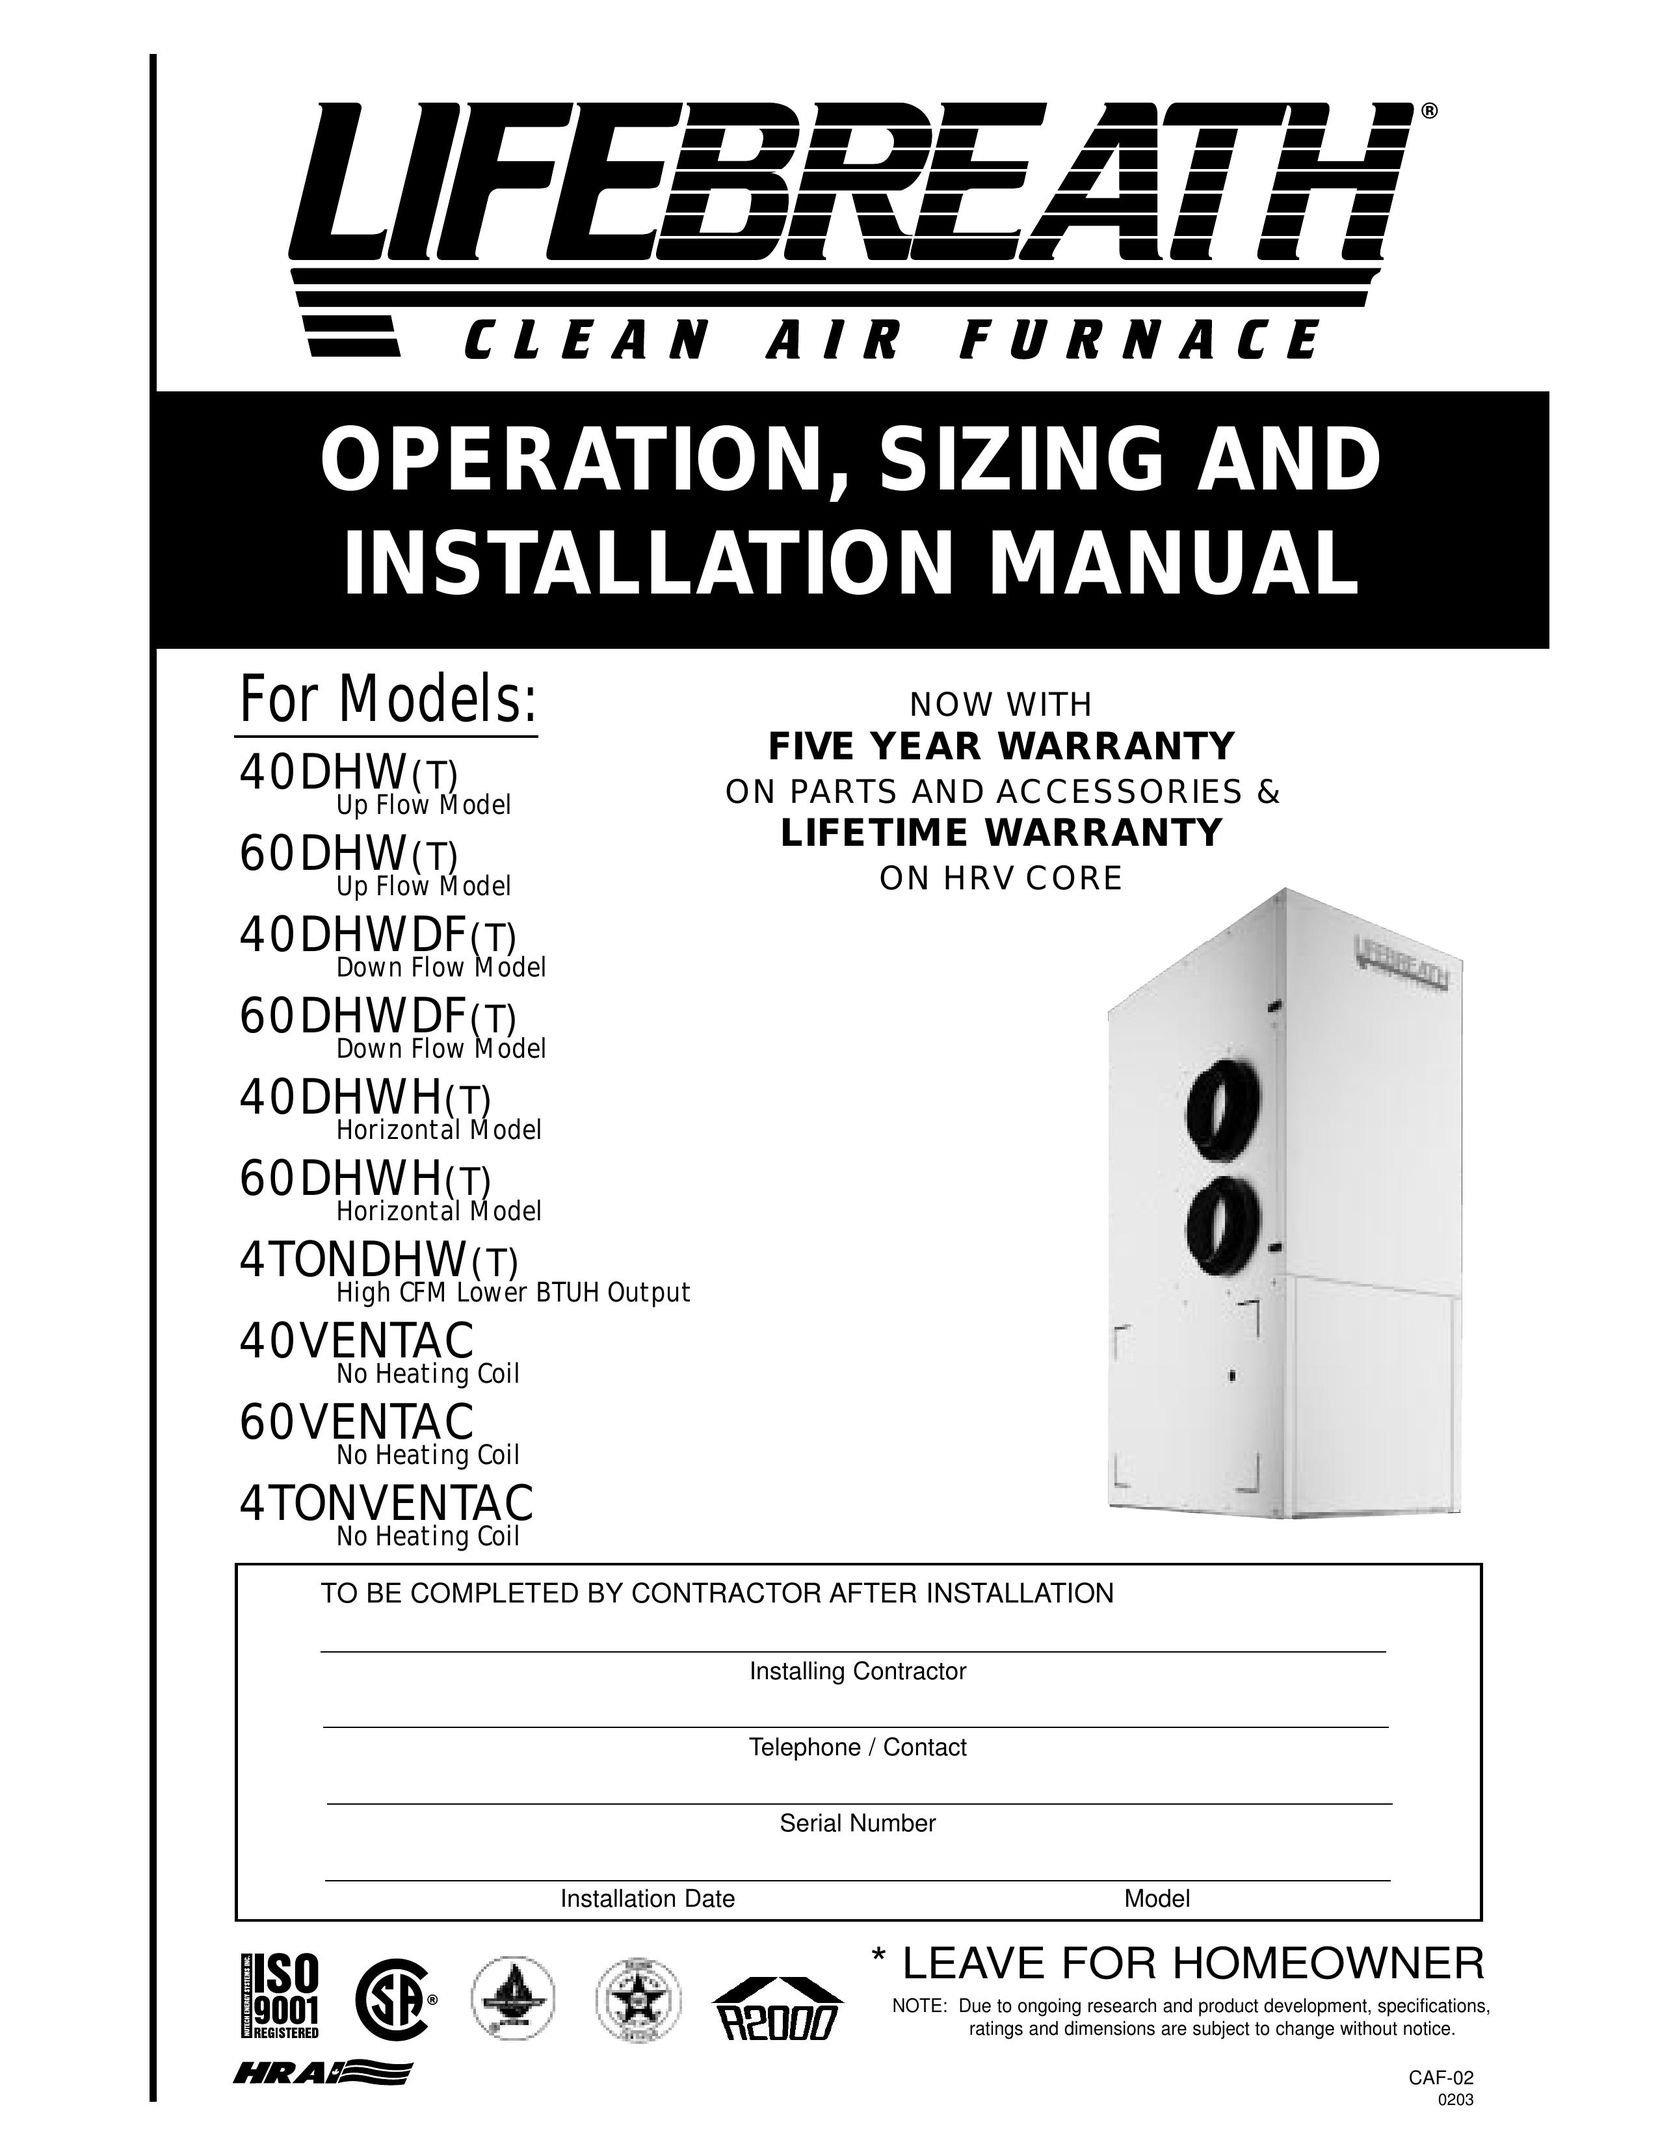 Lifebreath 40DHWDF(T) Thermostat User Manual